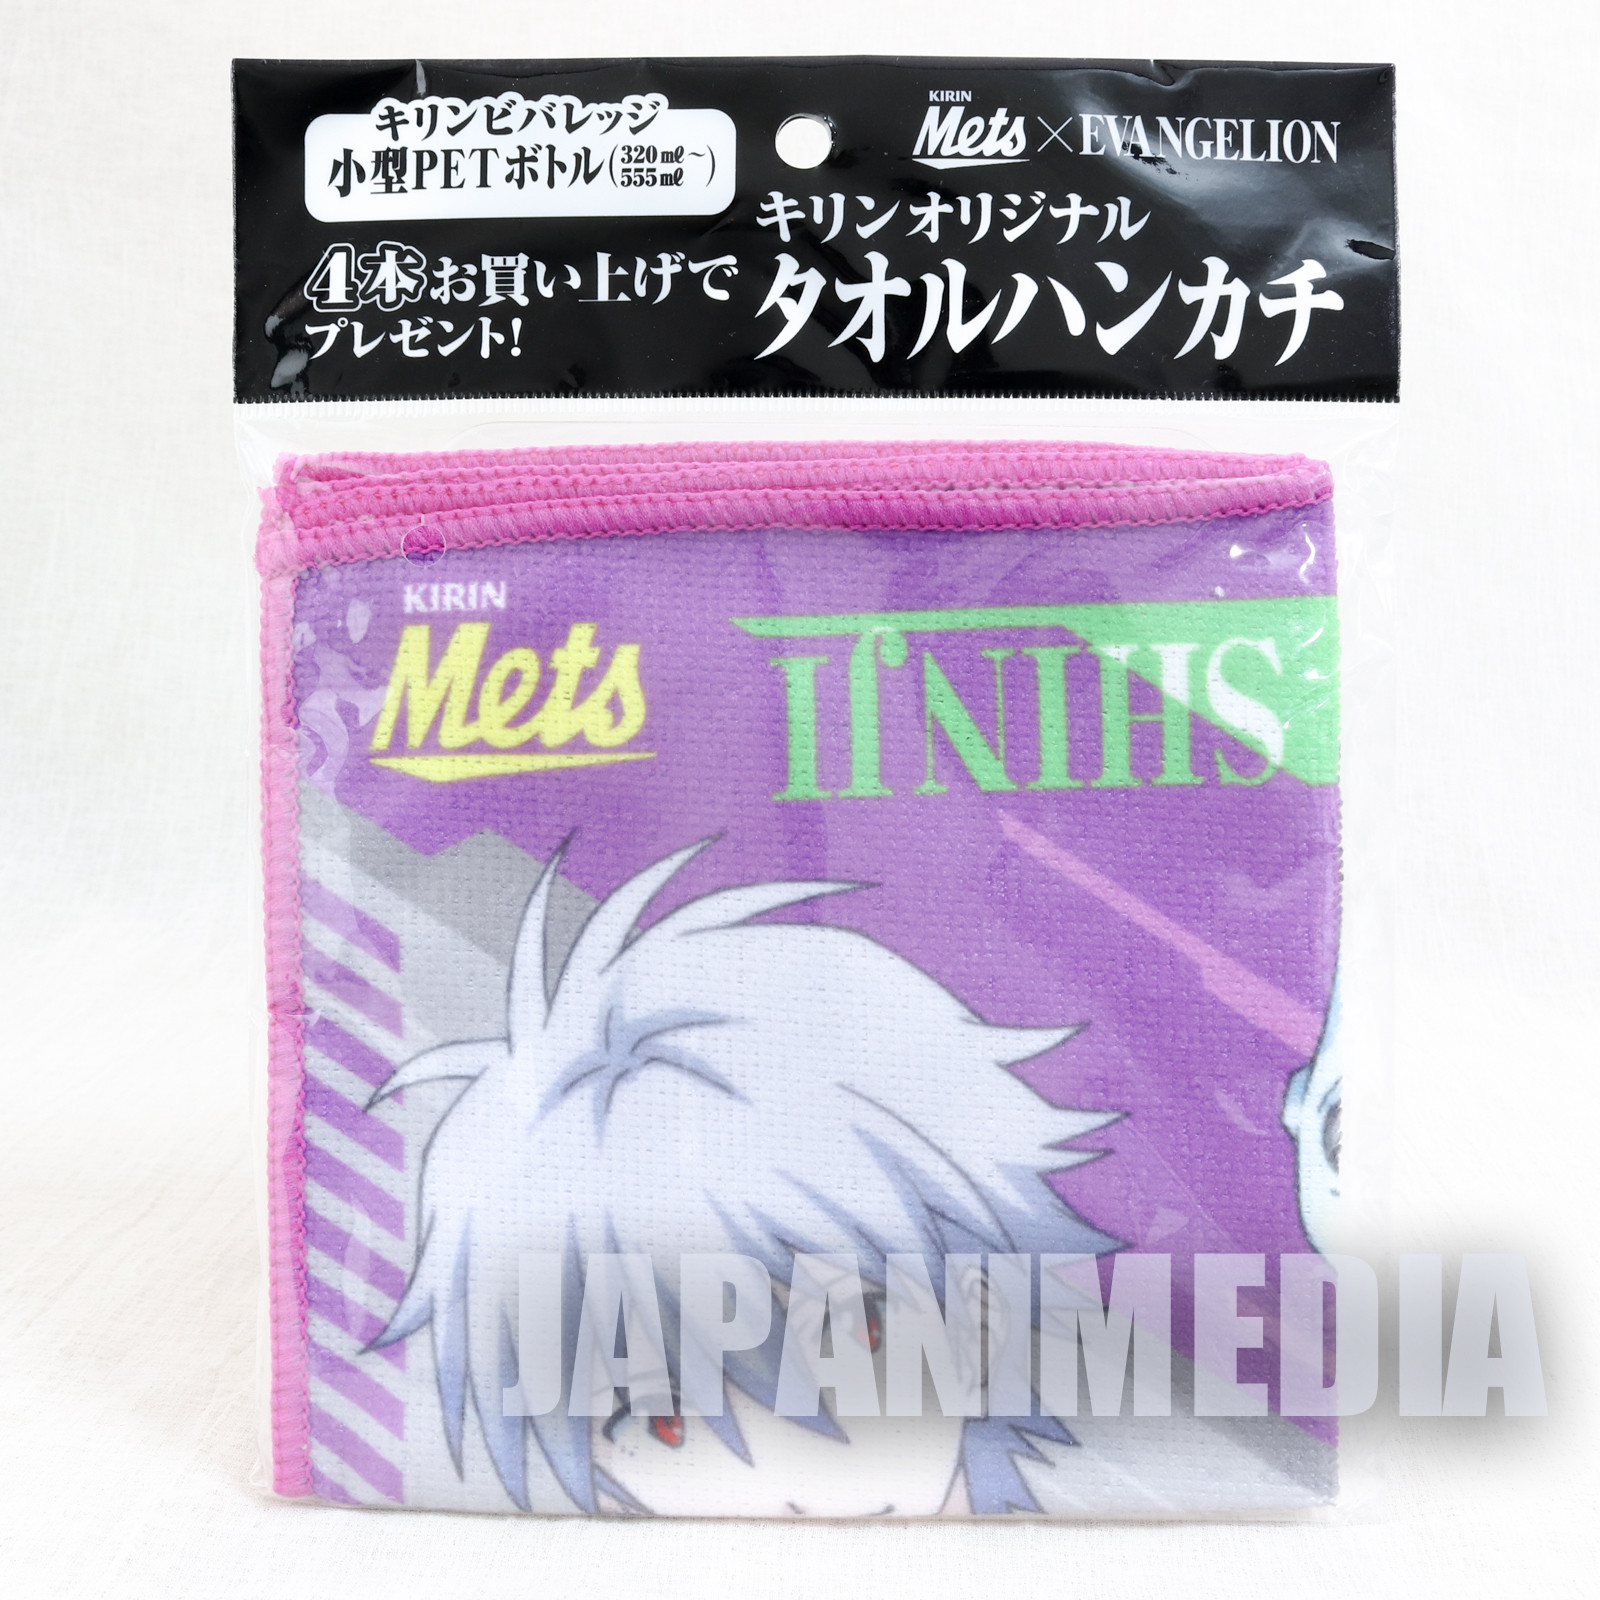 Evangelion Hand Towel Shinji Ikari Kaworu Nagisa JAPAN ANIME MANGA